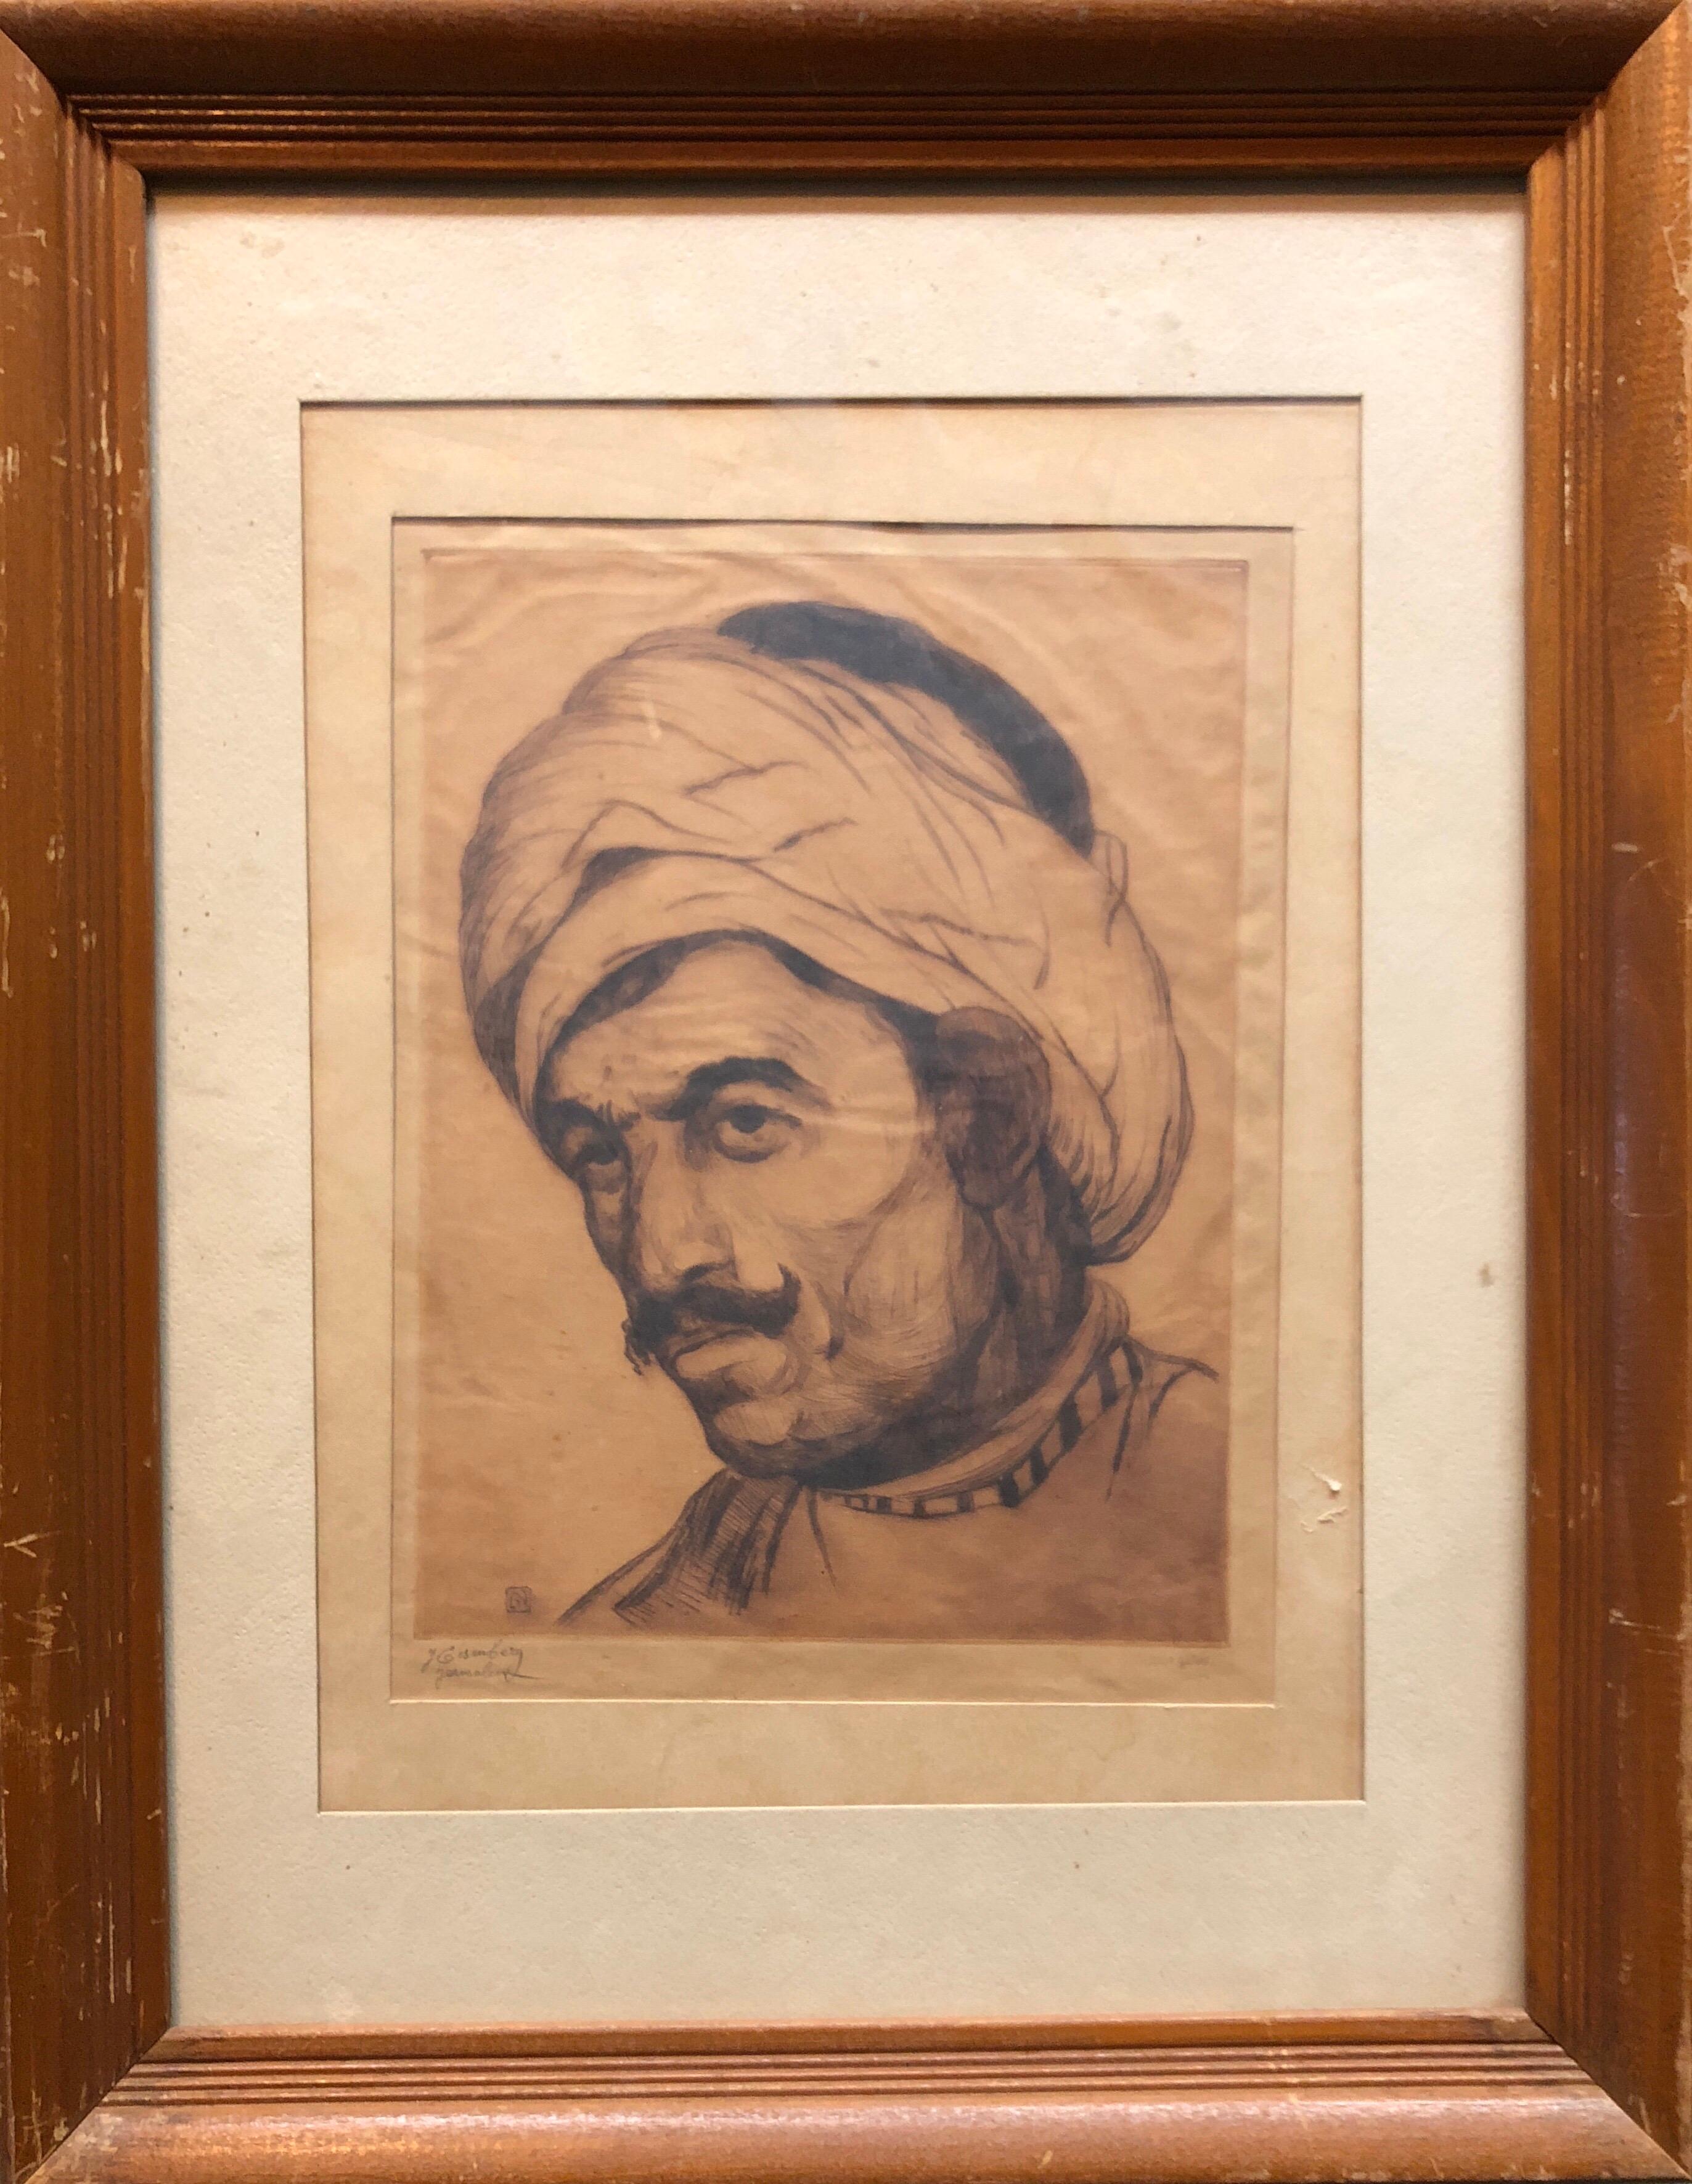 Bezalel School Jerusalem, Middle Eastern Arab Man in Turban Circa 1920s Etching - Art Nouveau Print by Jacob Eisenberg